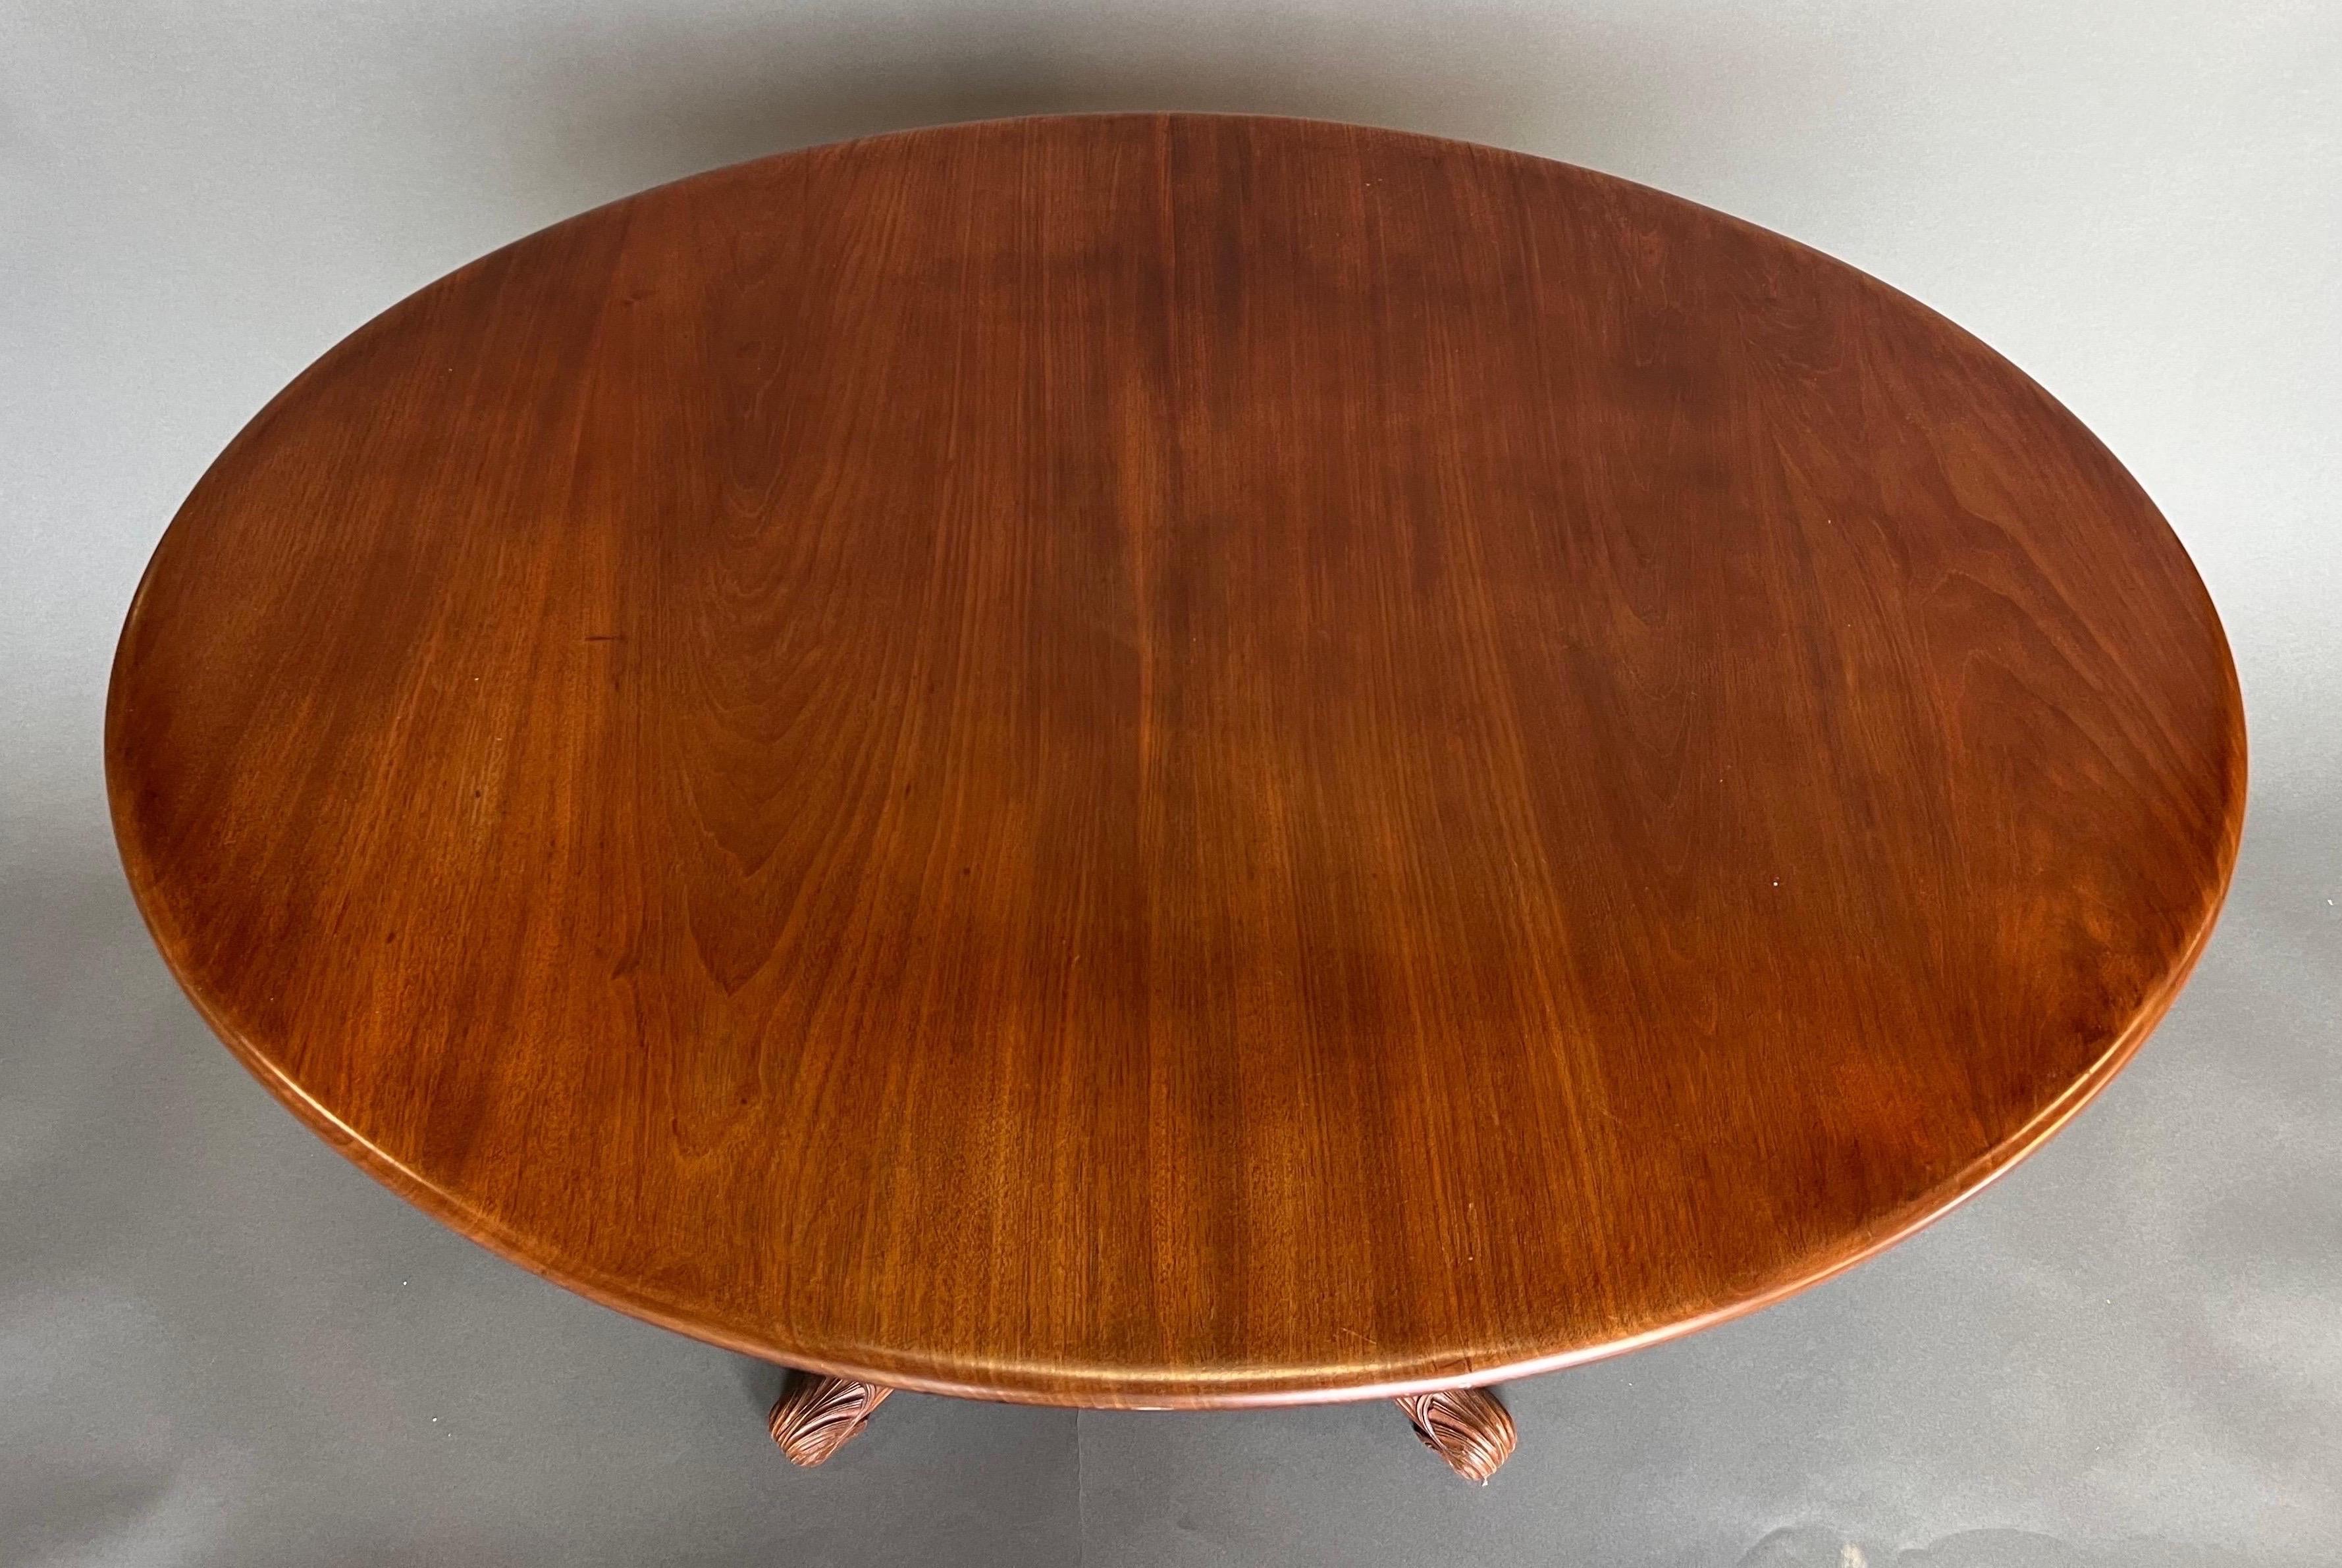 Fine 19th Century Irish Regency Period Oval Top Mahogany Table For Sale 3